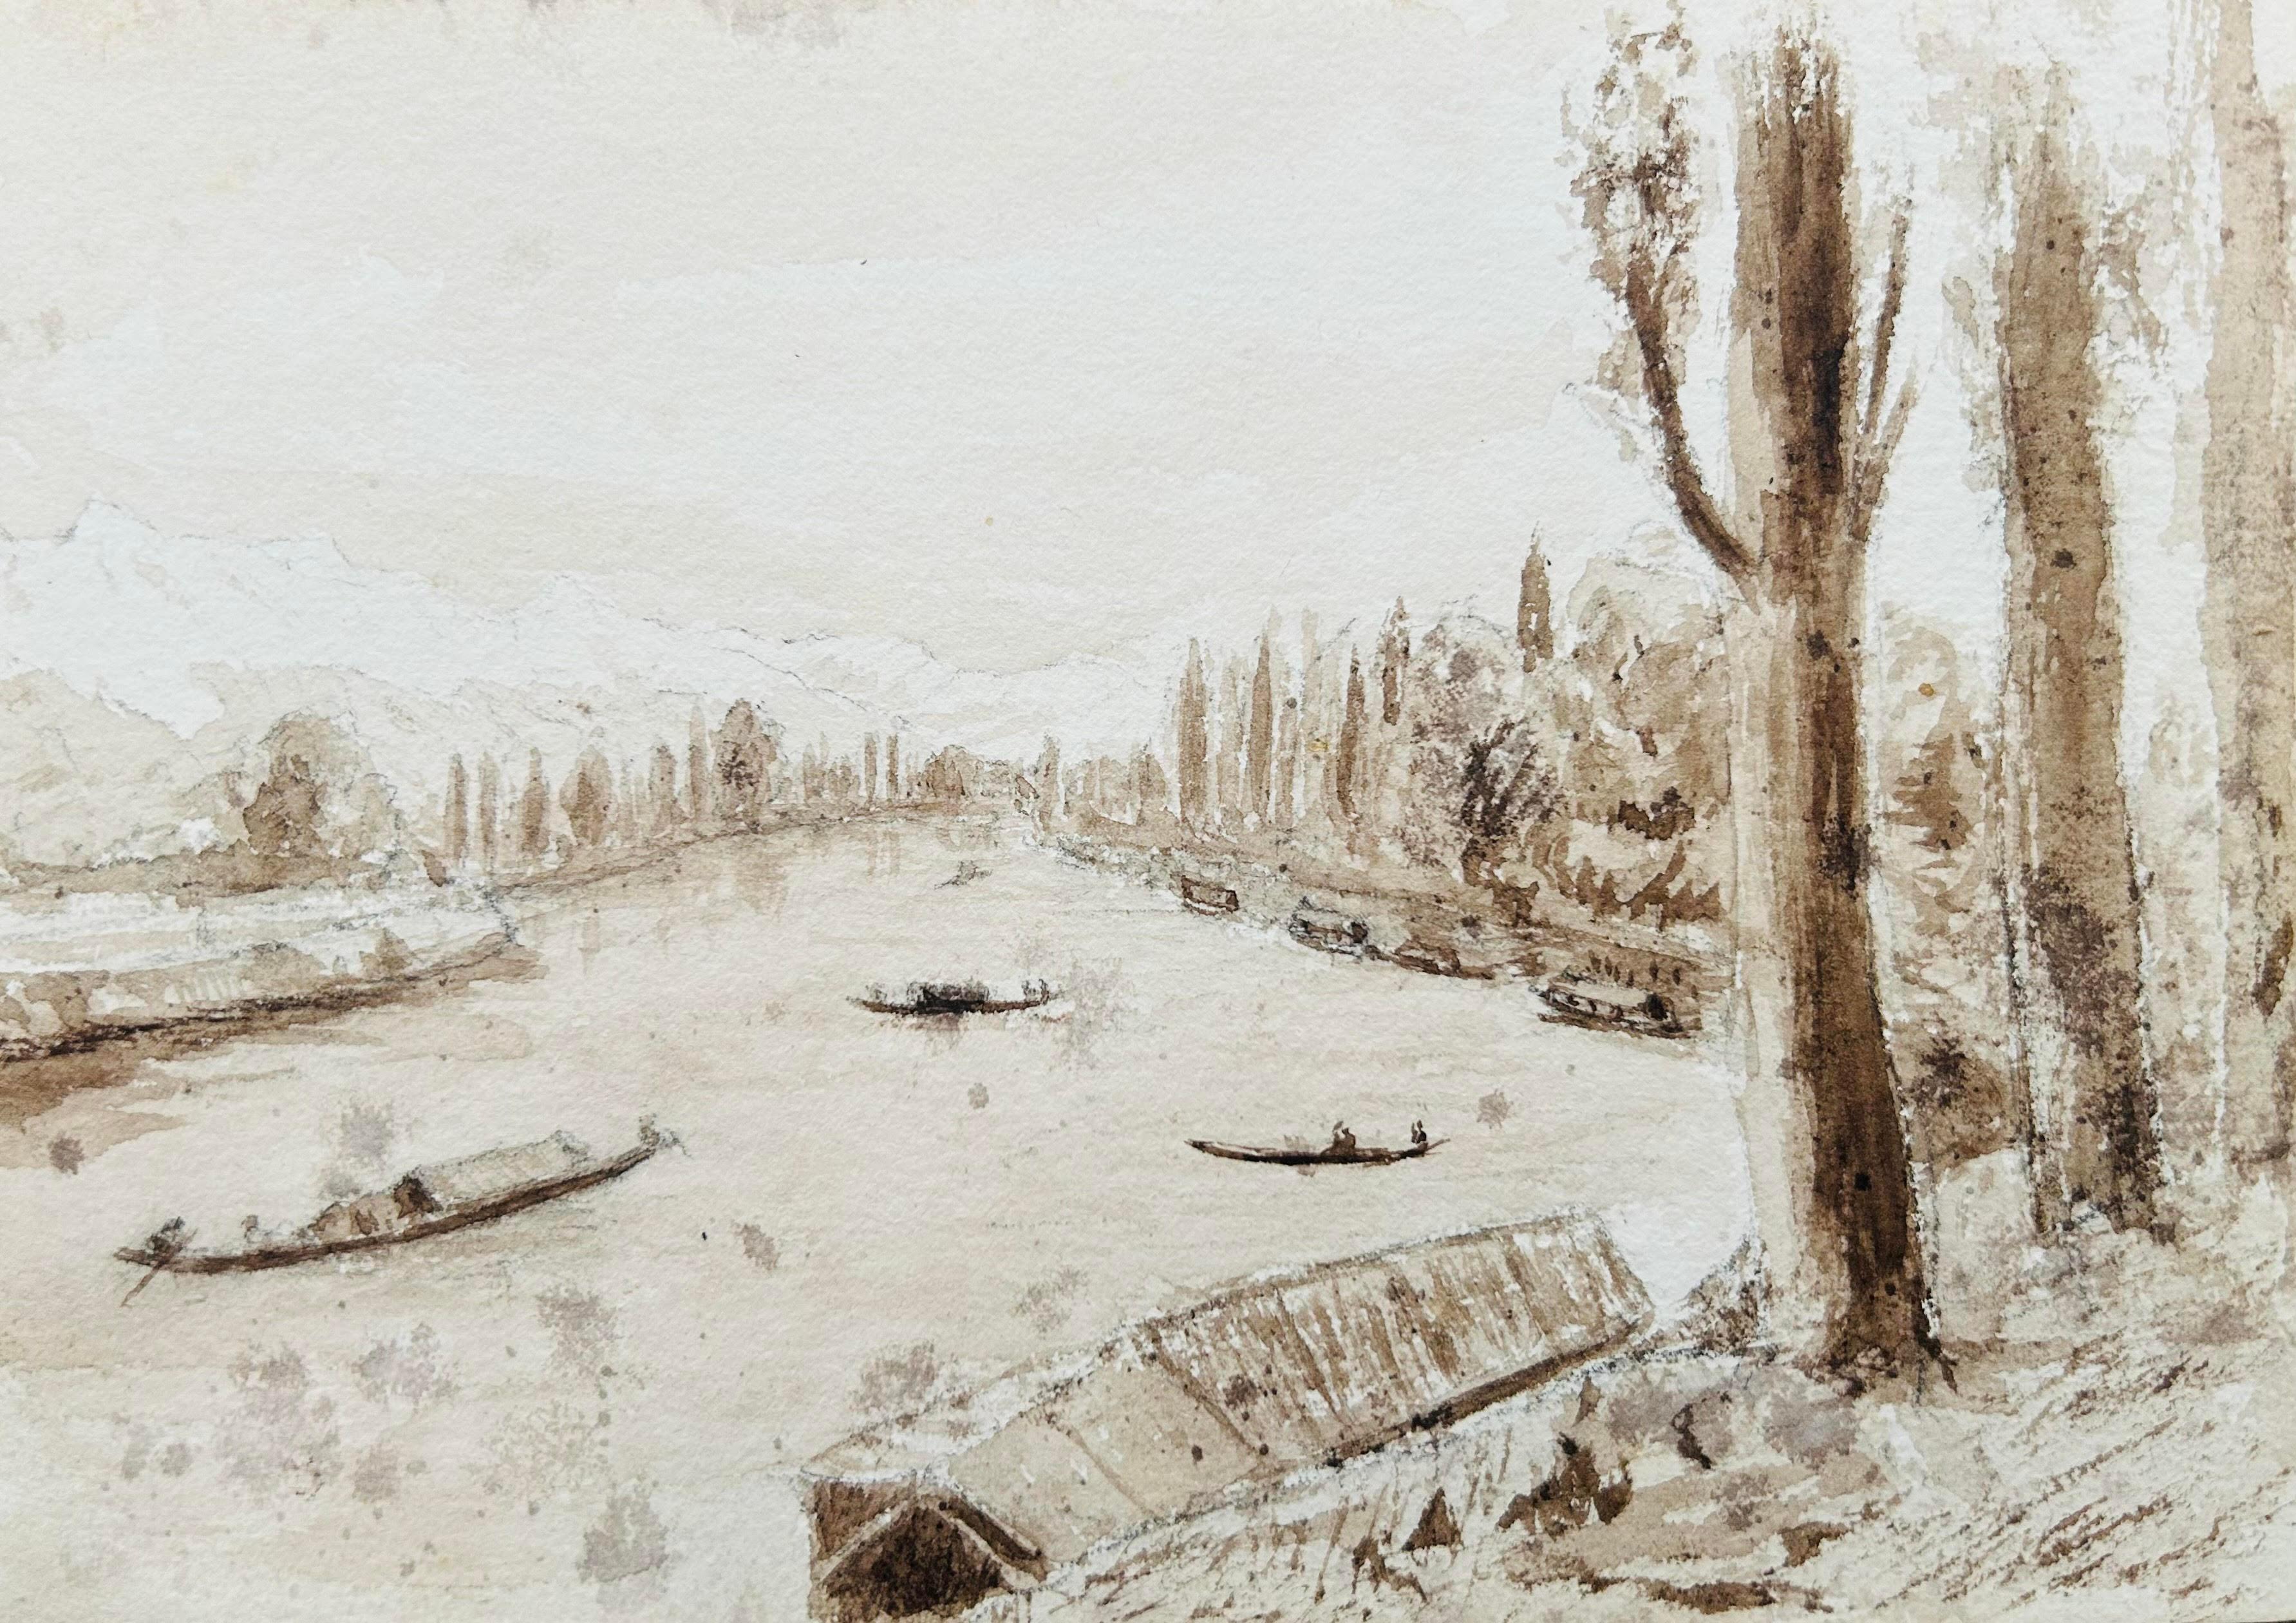 Unknown Landscape Art - India 3 X 19th century Kashmir NW Frontier Field Sketches Manasbal Lake, Kashmir